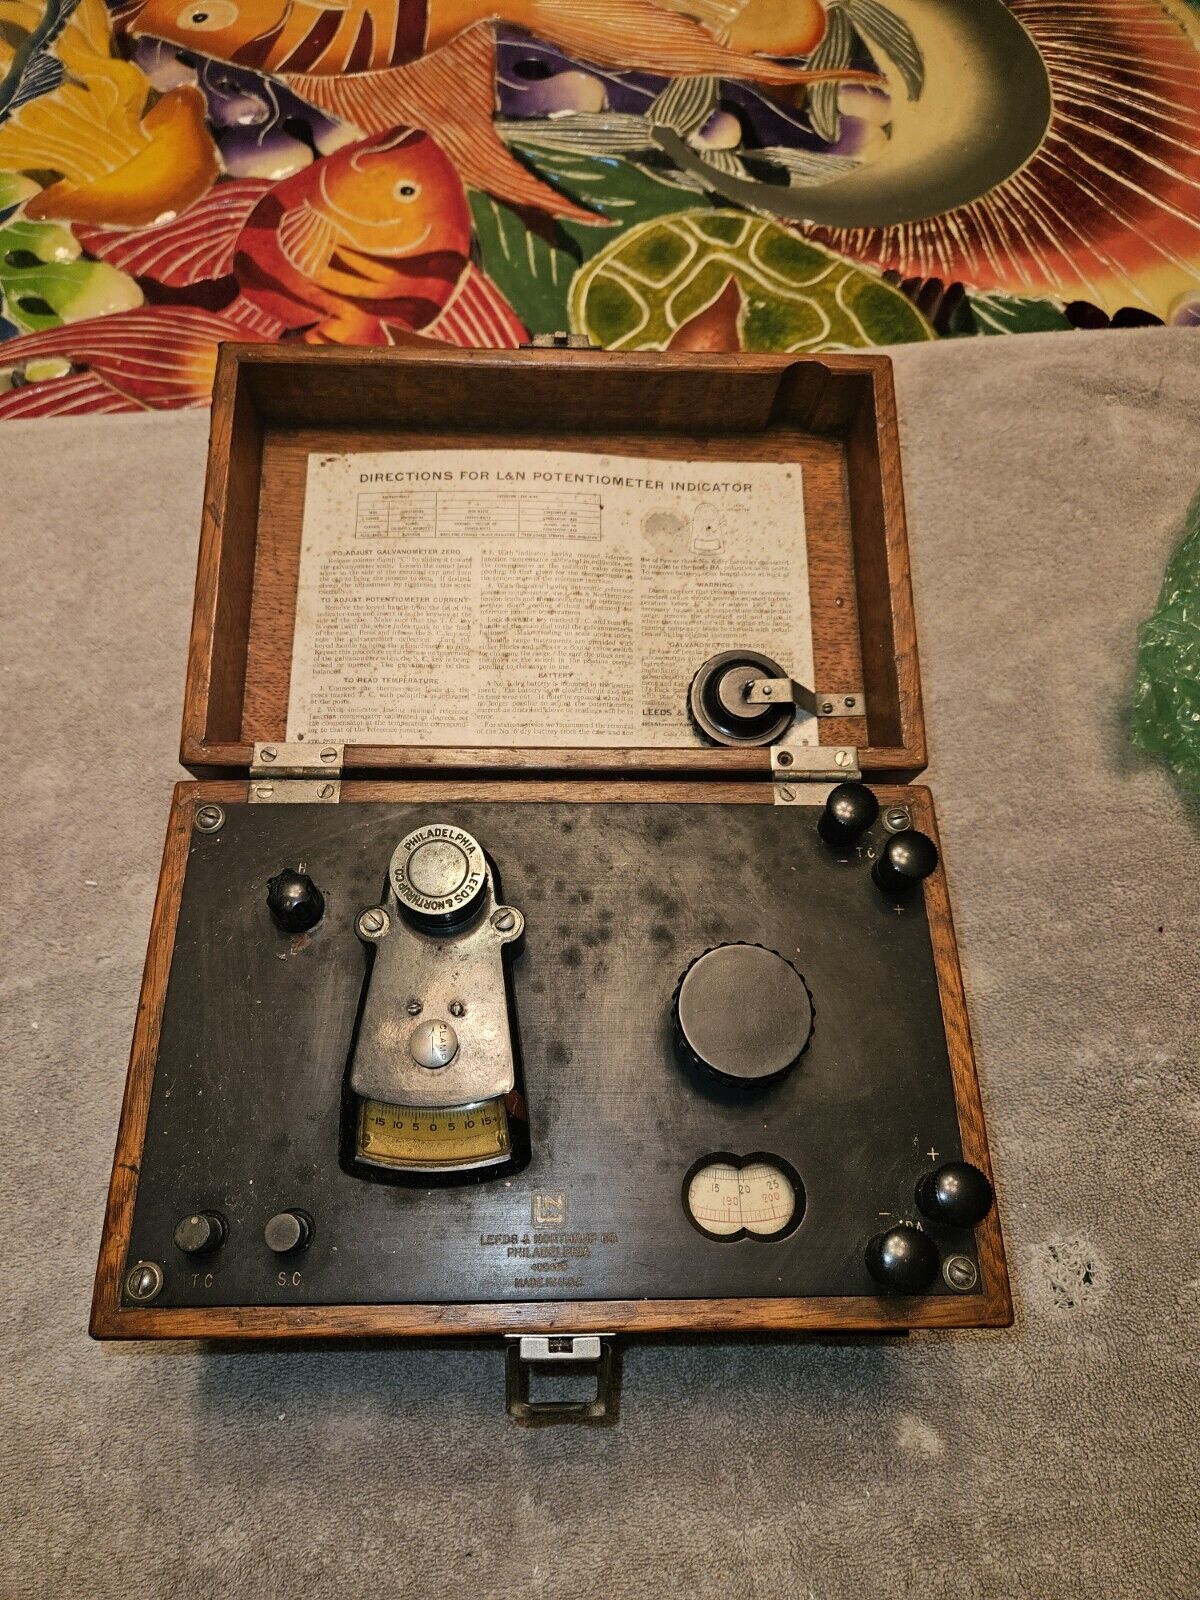 Leeds & Northrup Potentiometer Indicator Antique Science Electrical Equipment